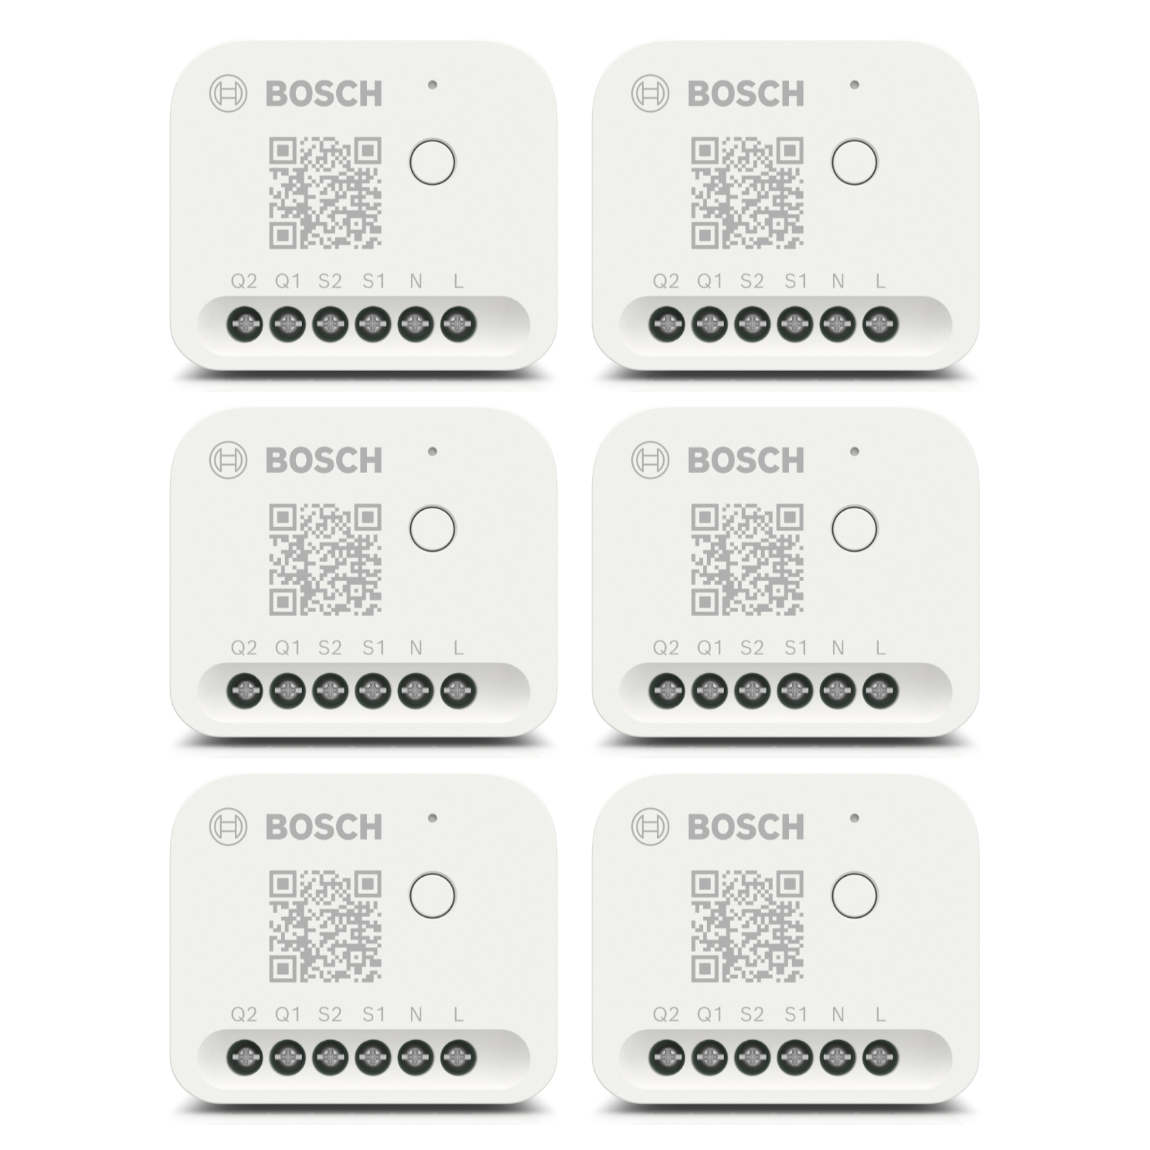 Bosch Smart Home Licht-/ Rollladensteuerung II 6er-Set – Deal, Schnäppchen, sparen